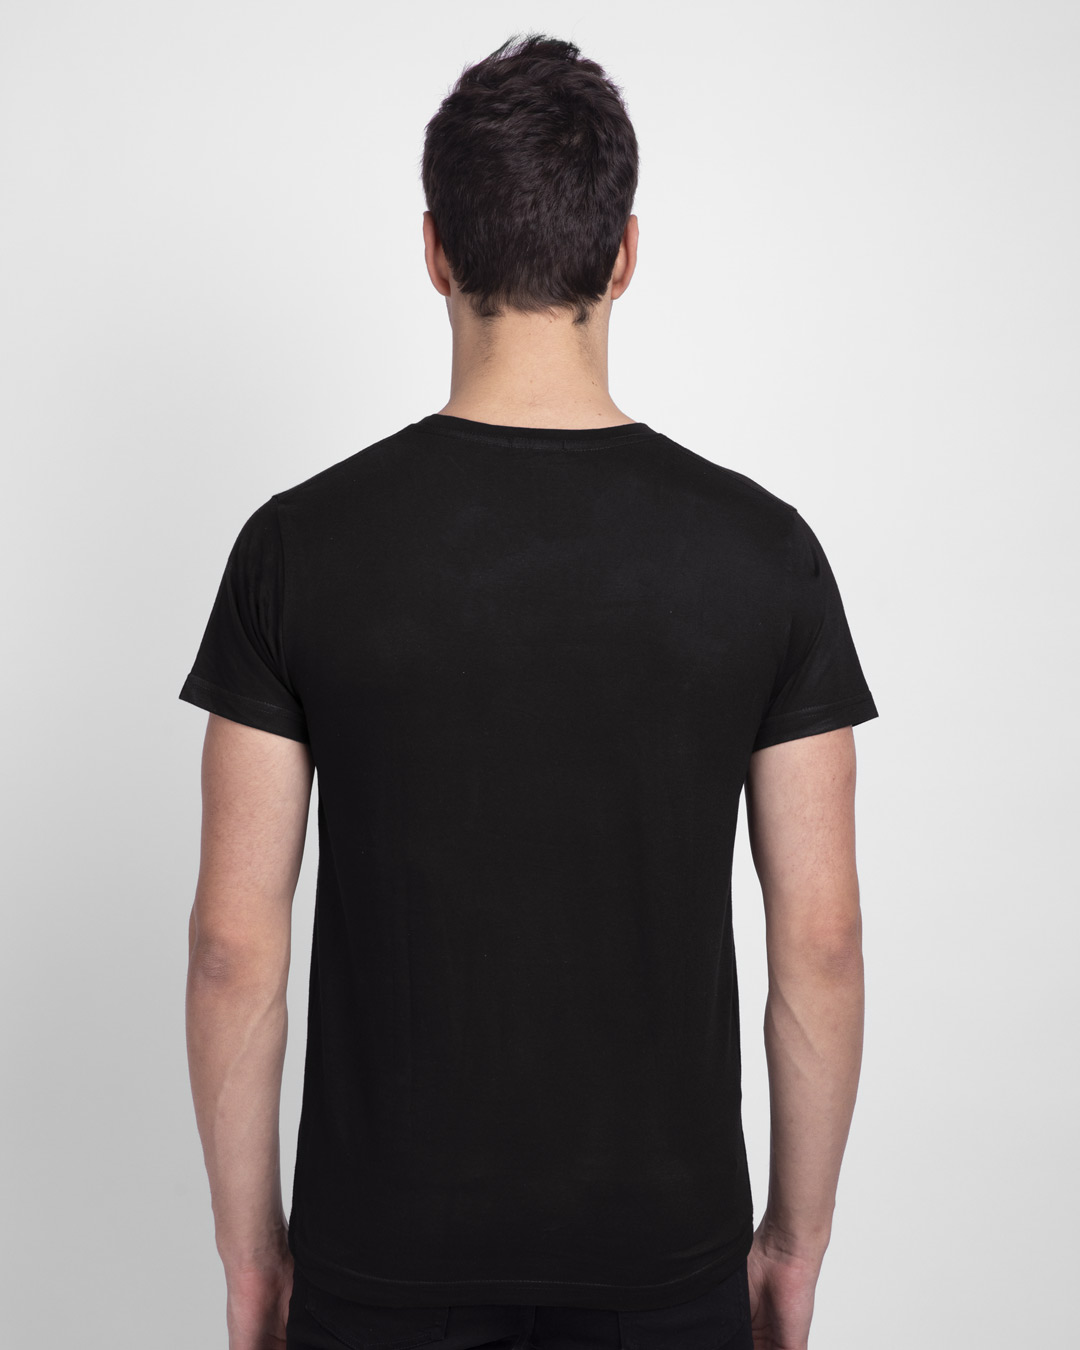 Shop The Hidden Spidey Suit Half Sleeve T-Shirt (AVL )-Back